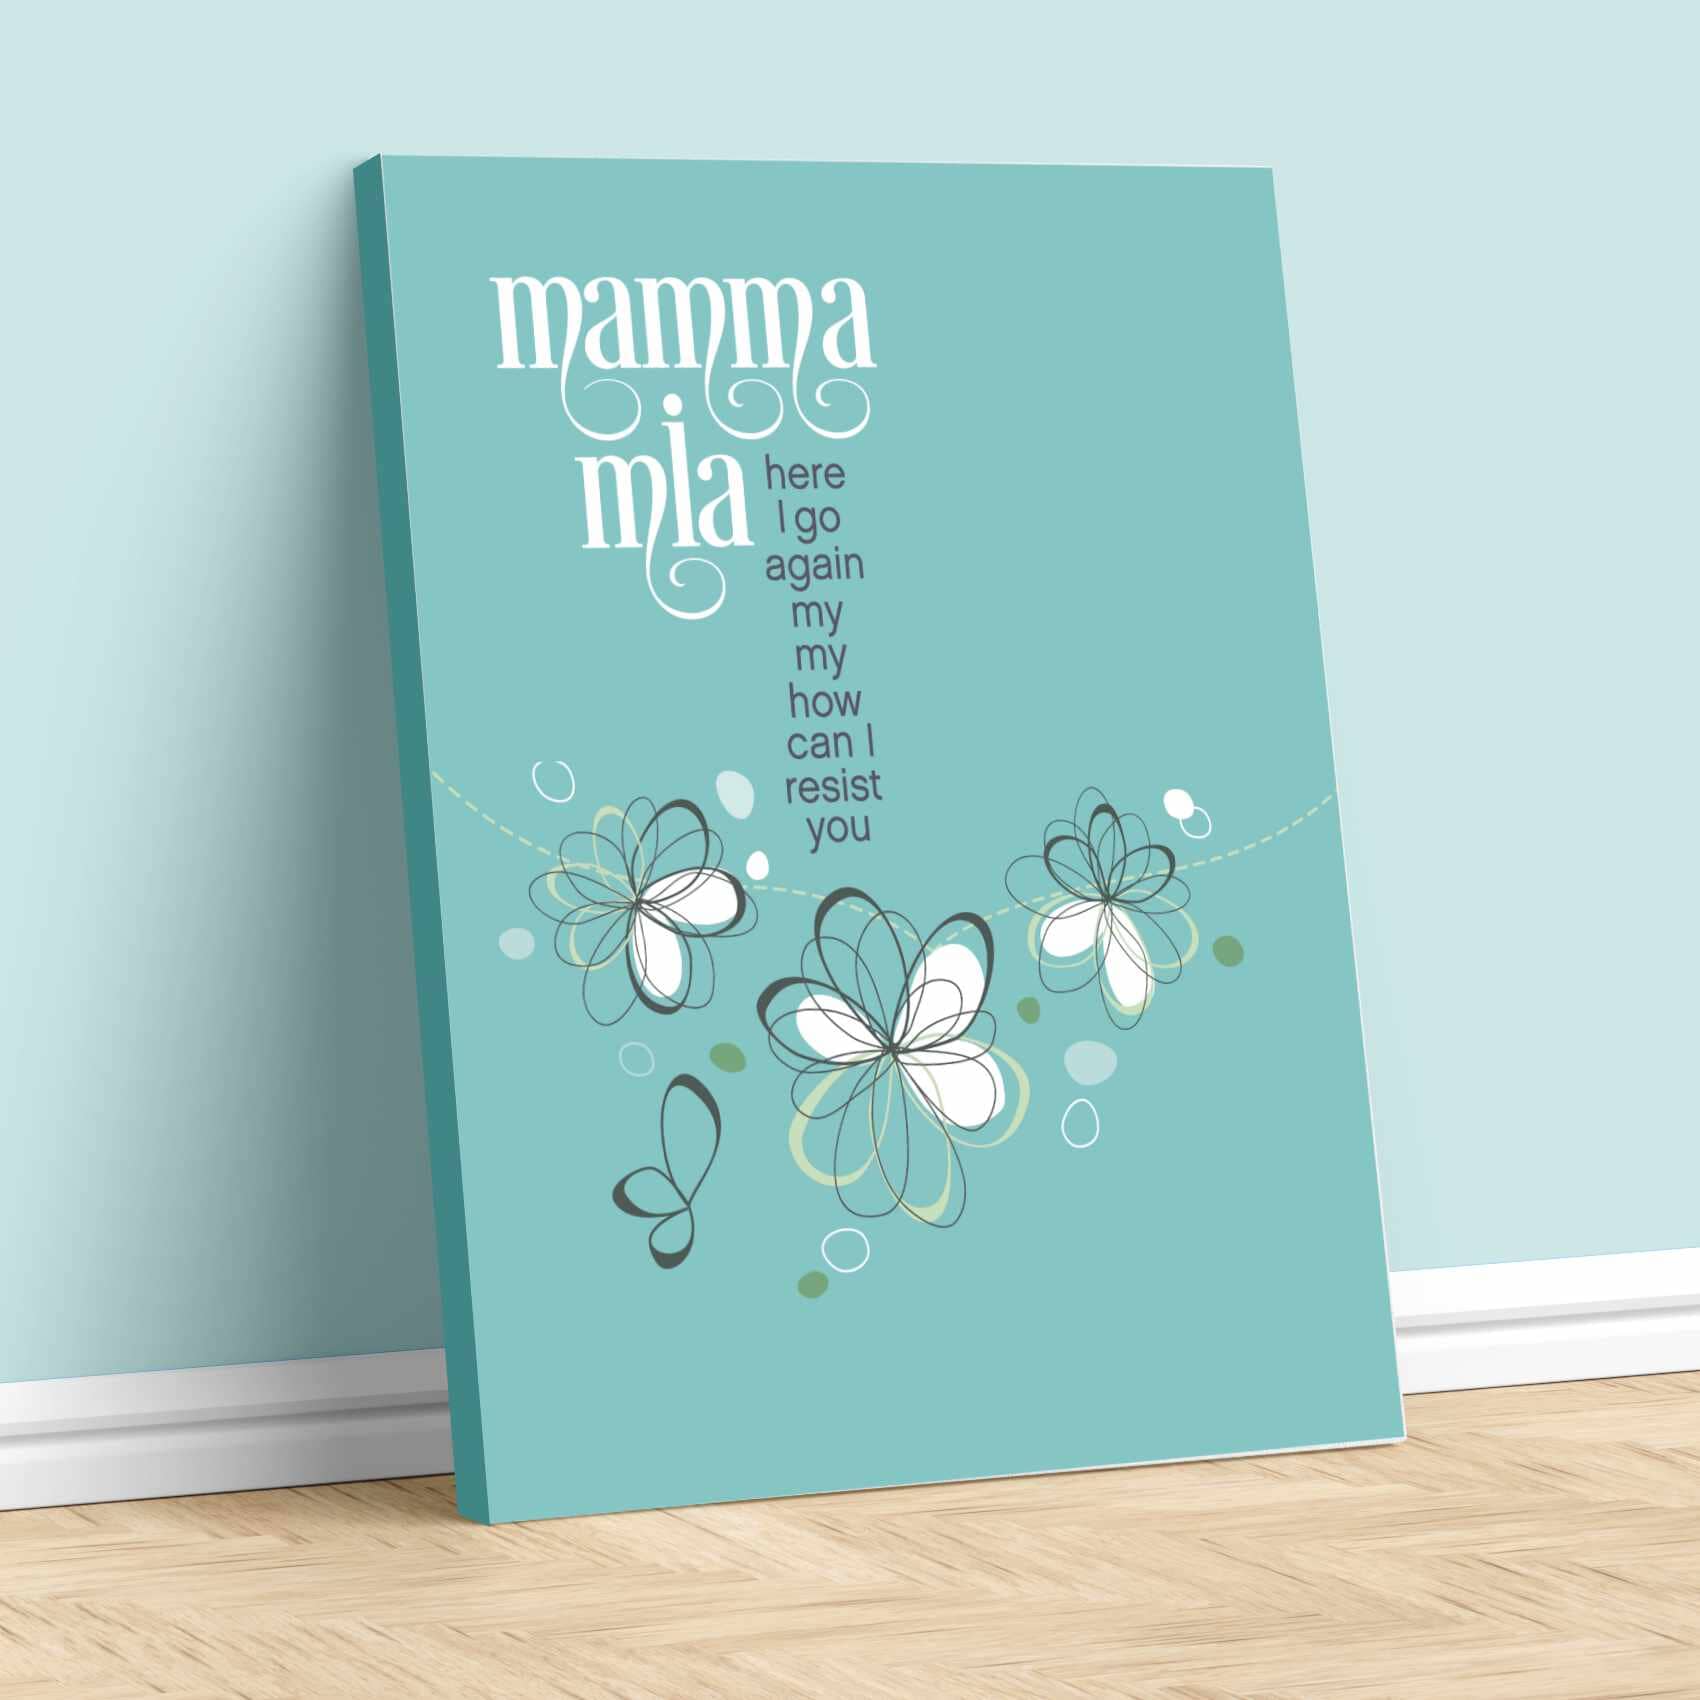 Mamma Mia by ABBA - Song Lyric Pop Music Wall Art Print Song Lyrics Art Song Lyrics Art 11x14 Canvas Wrap 